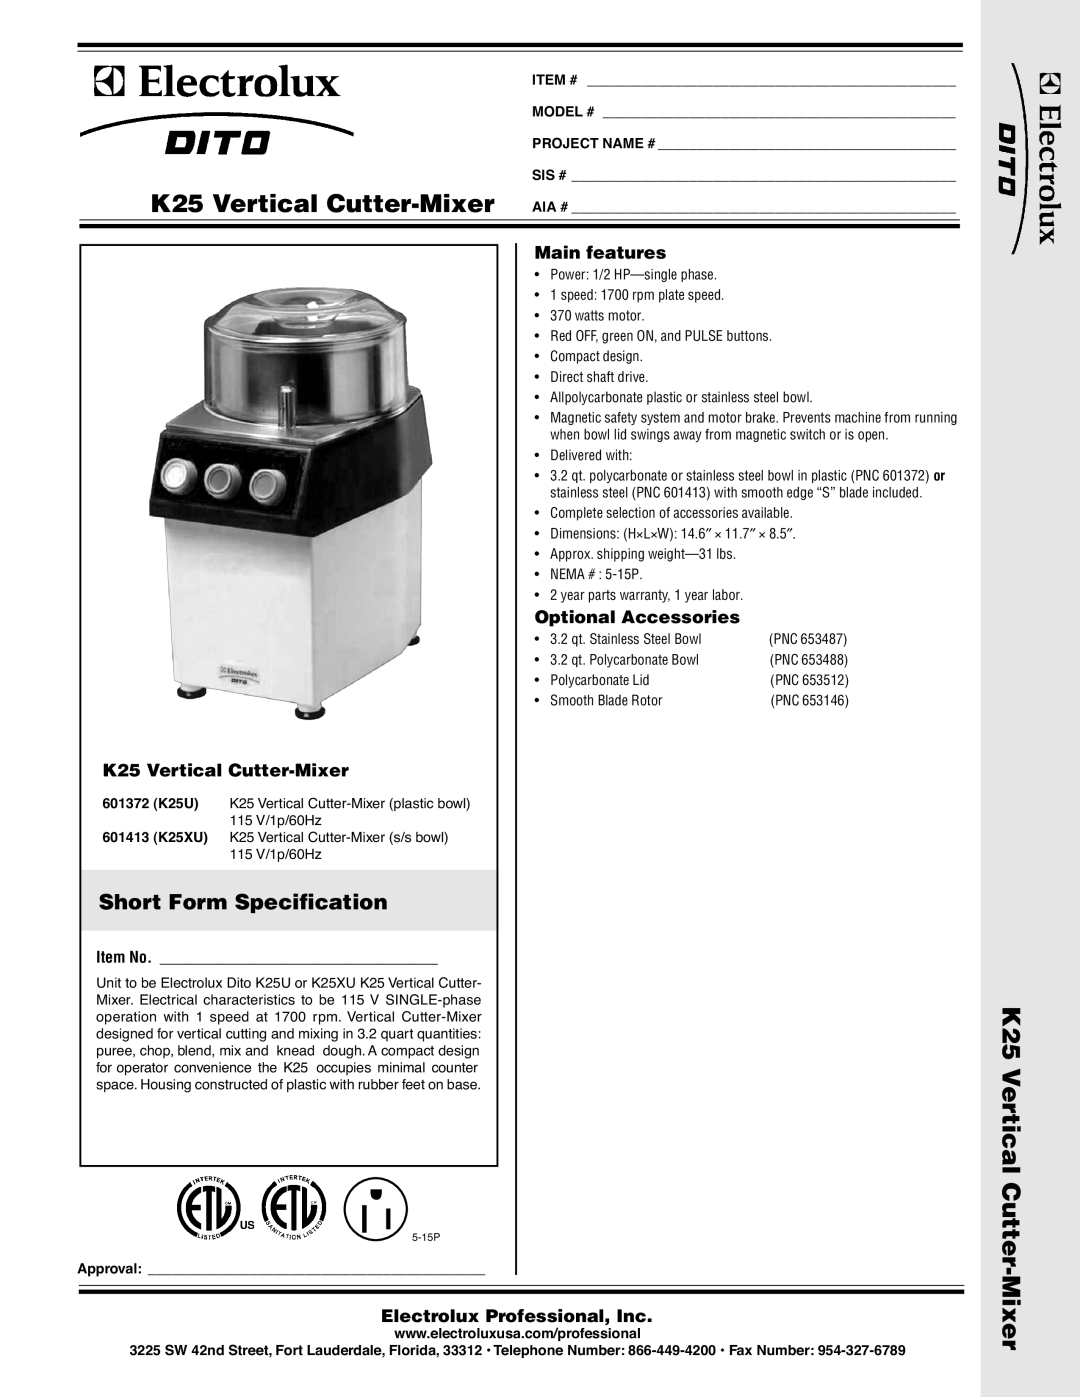 Electrolux K25XU, K25U dimensions Short Form Specification, K25 Vertical Cutter-Mixer, Main features, Optional Accessories 